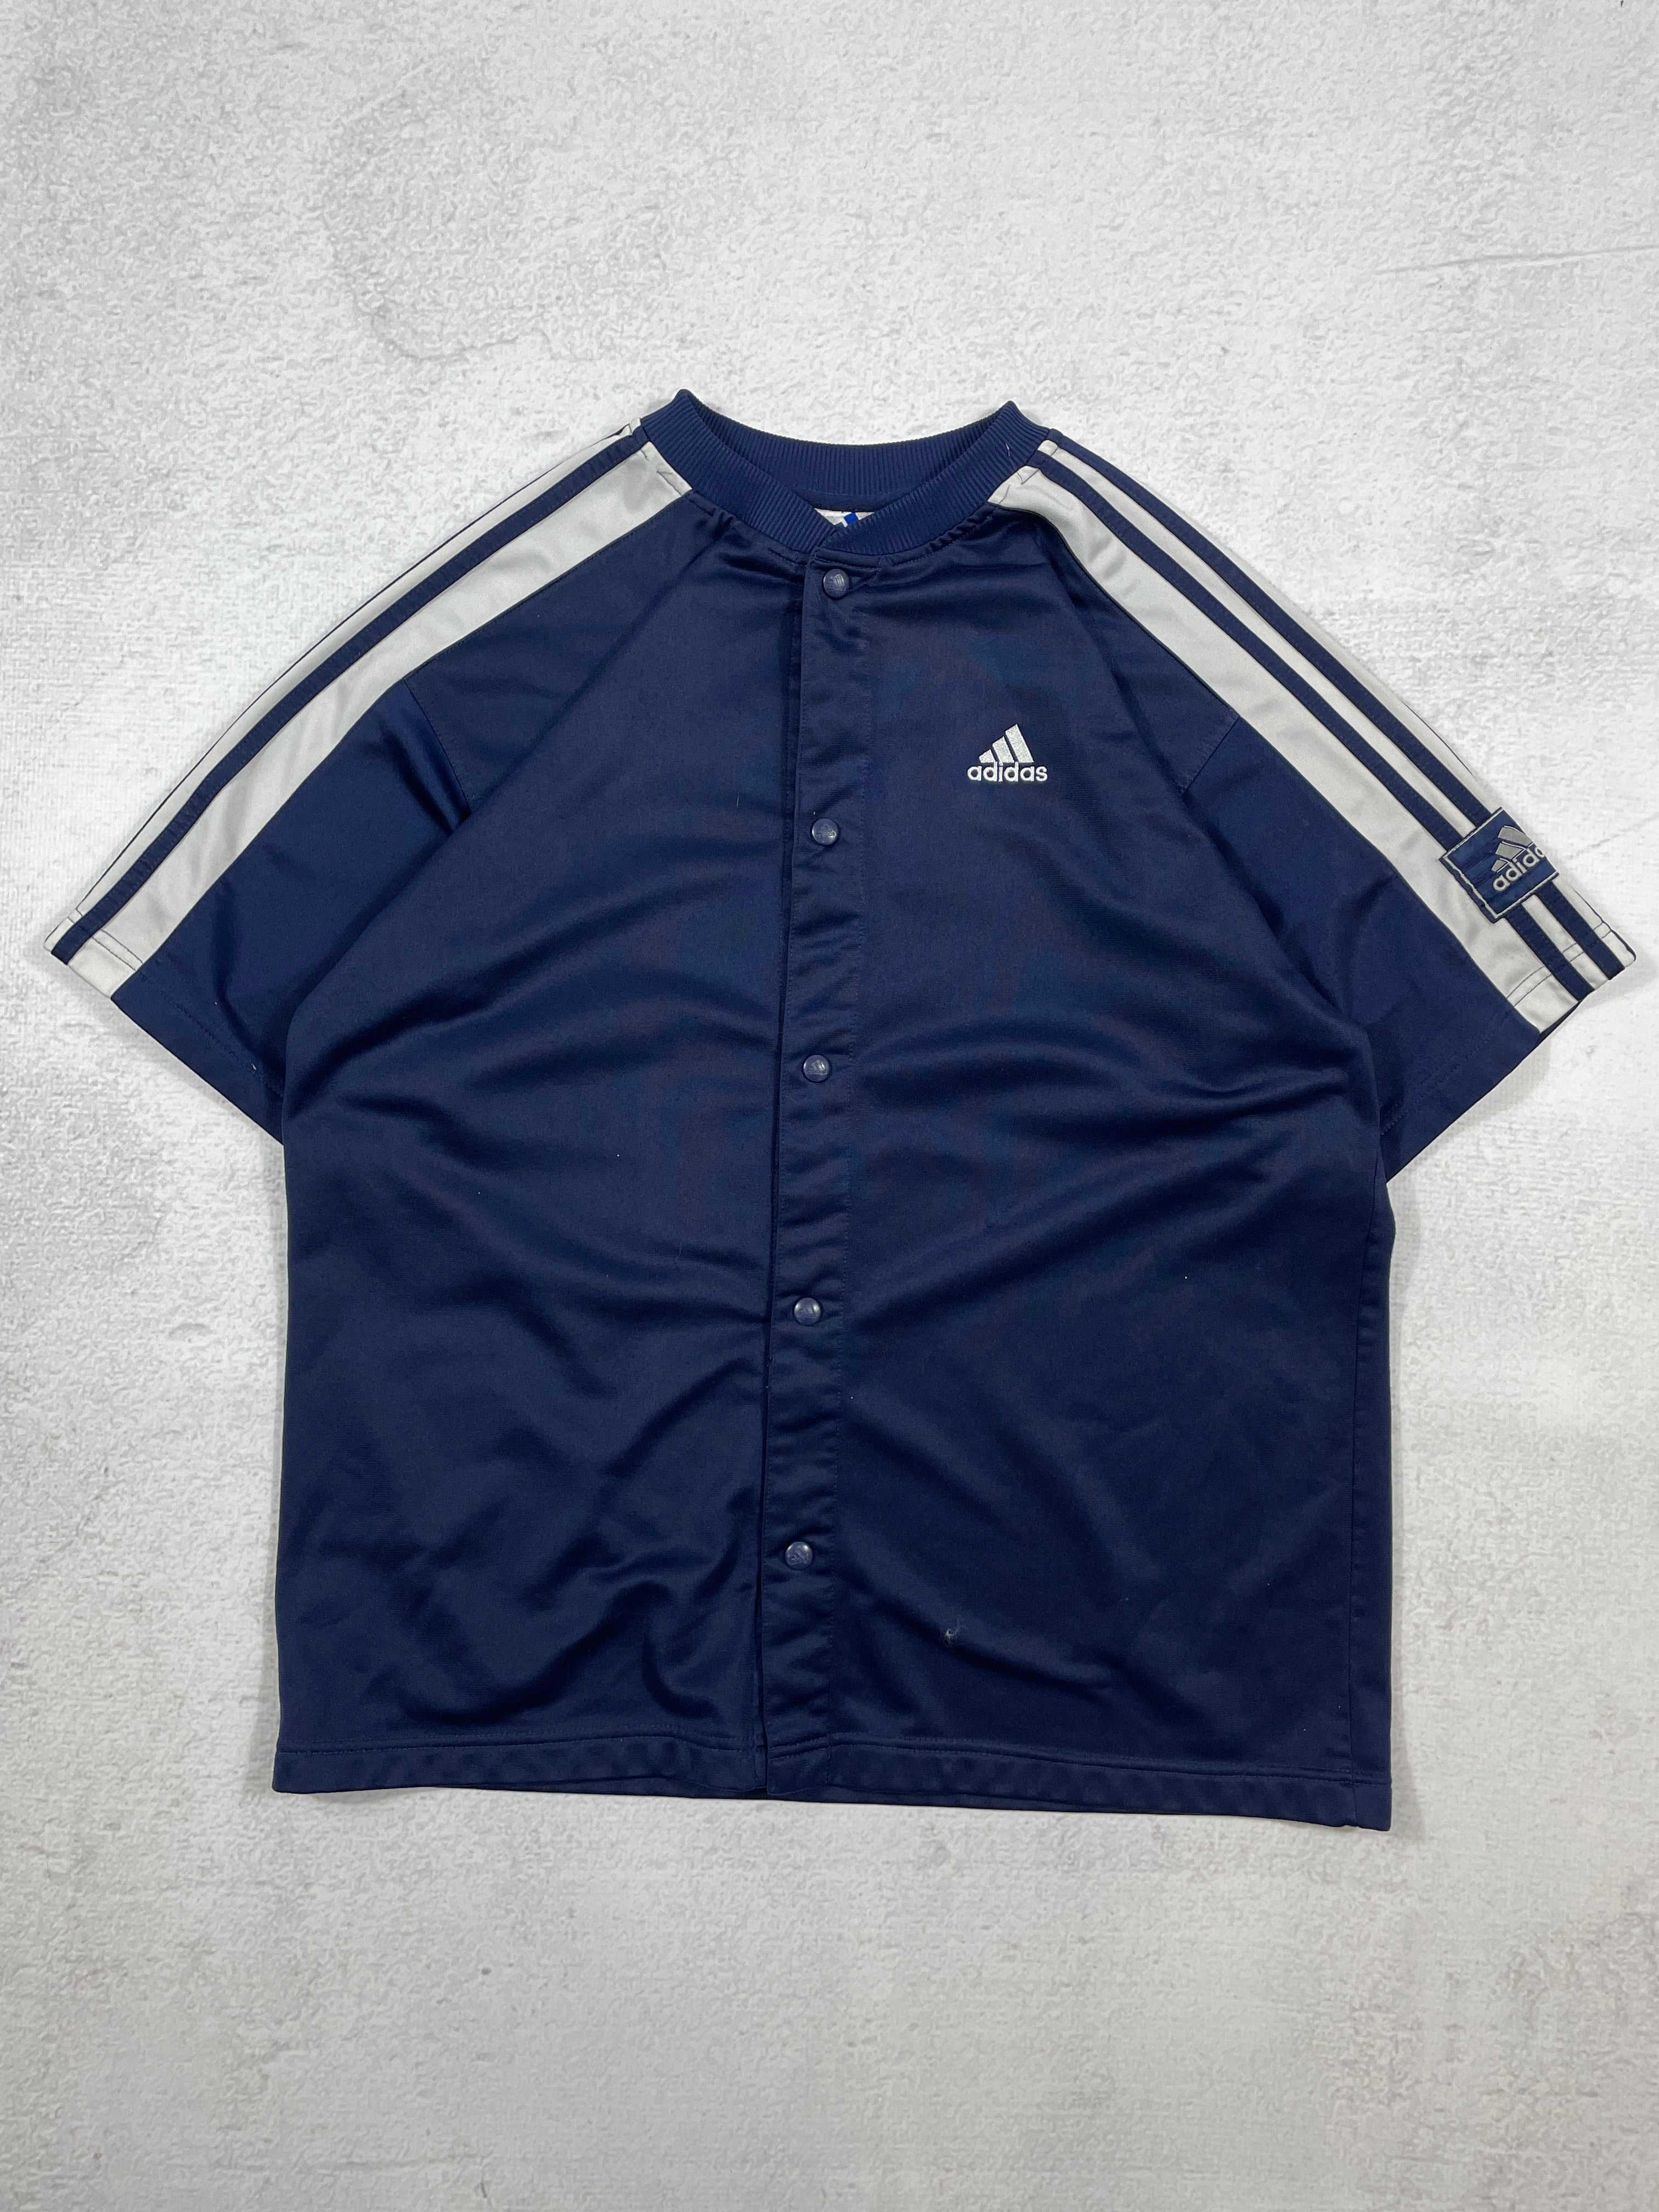 Vintage Adidas Jersey - Men's XL